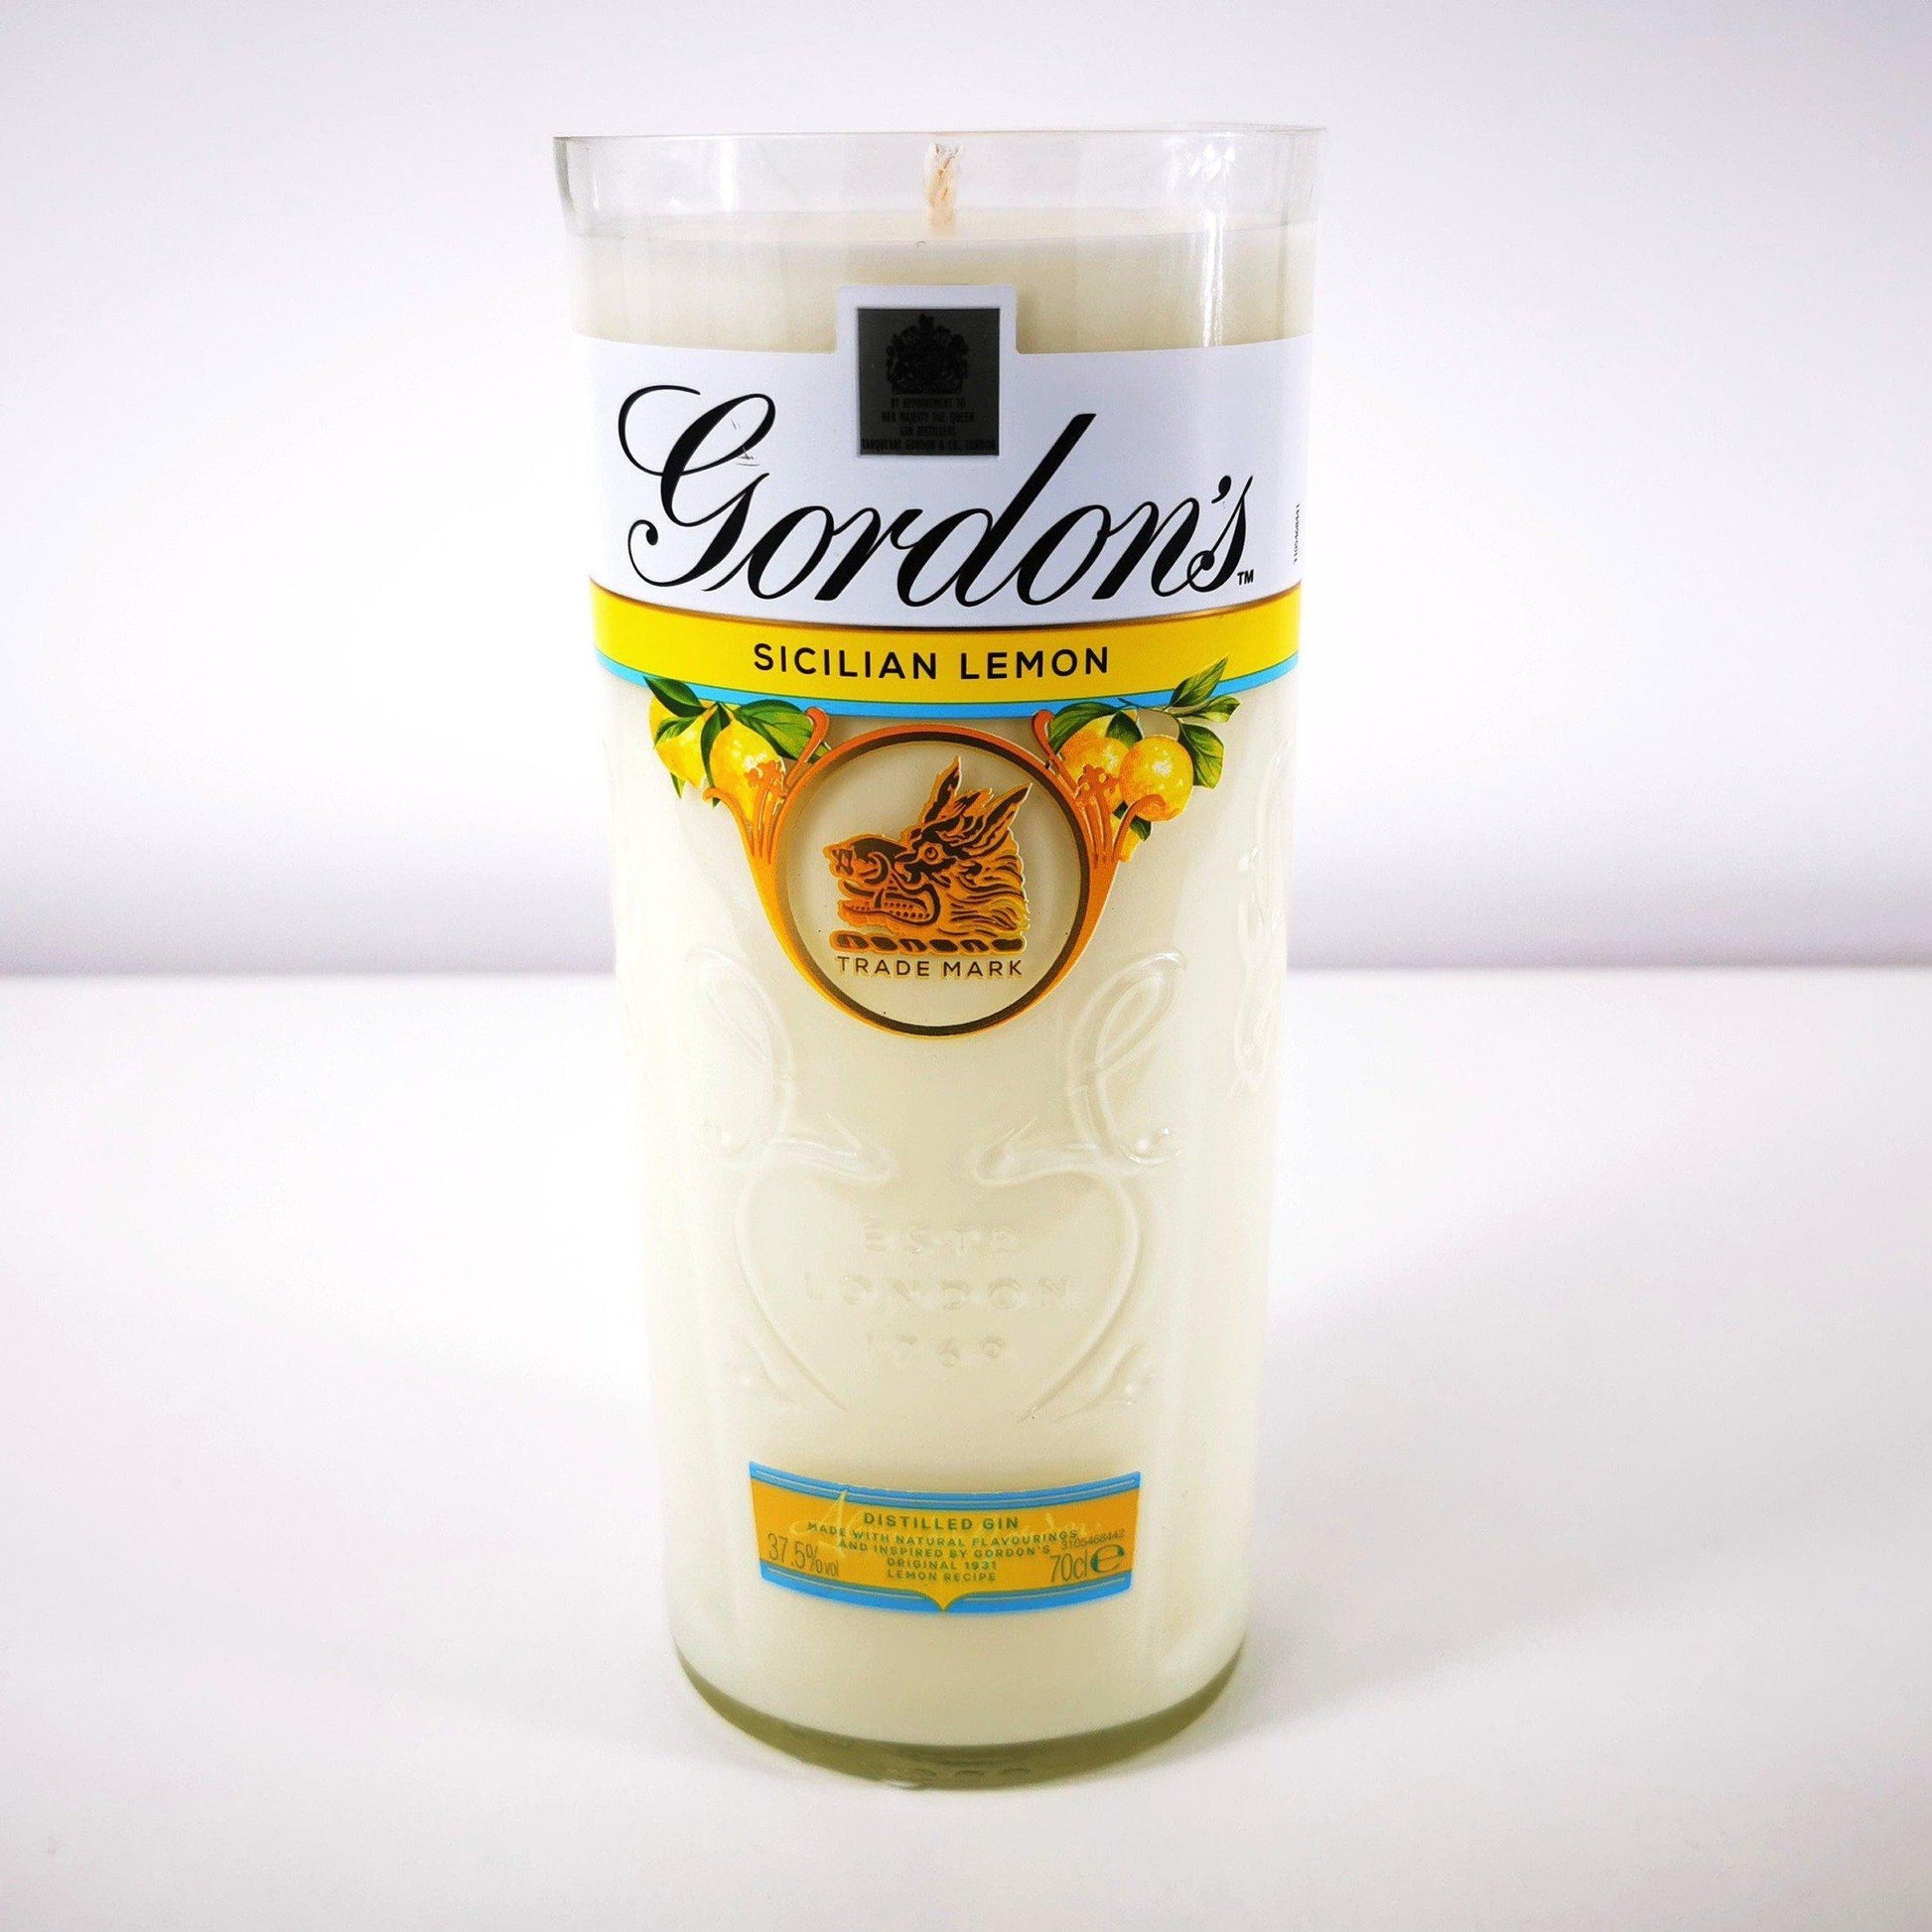 Gordon's Sicilian Lemon Gin Bottle Candle Gin Bottle Candles Adhock Homeware